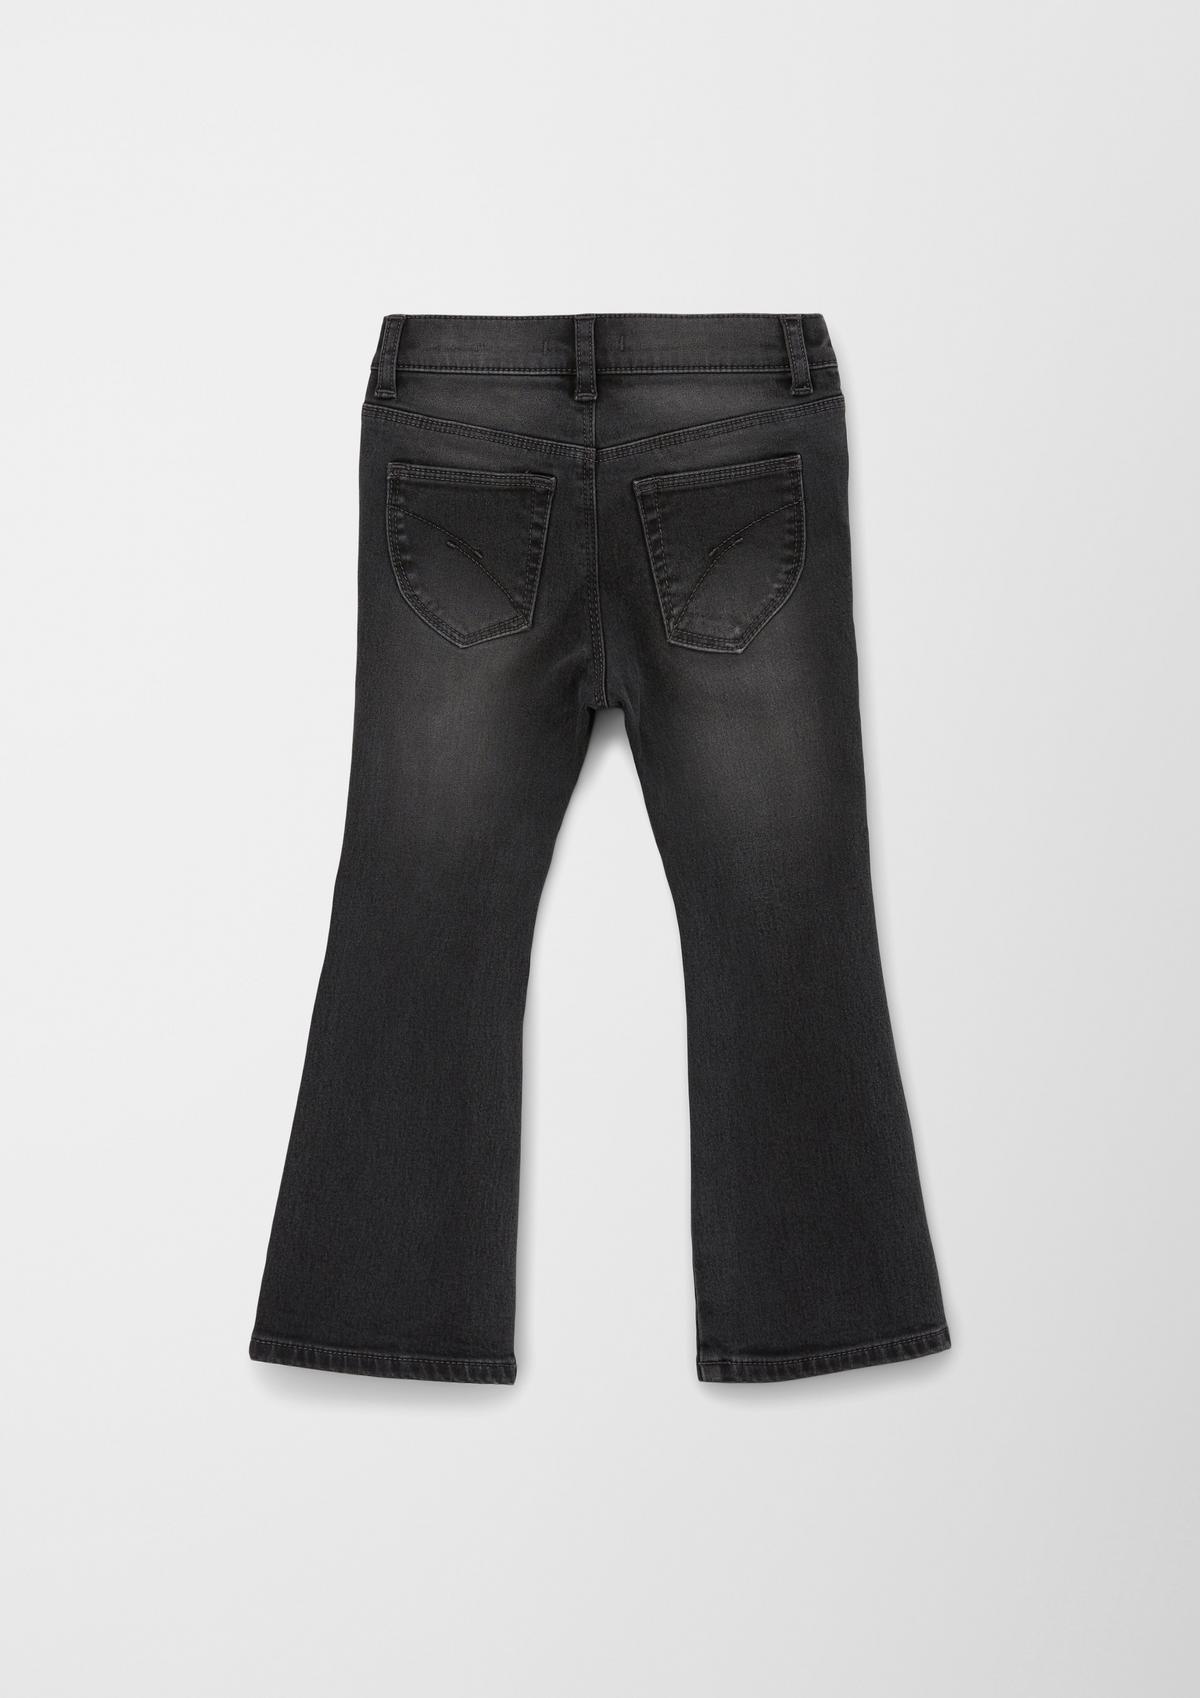 s.Oliver Betsy jeans / regular fit / mid rise / slim leg